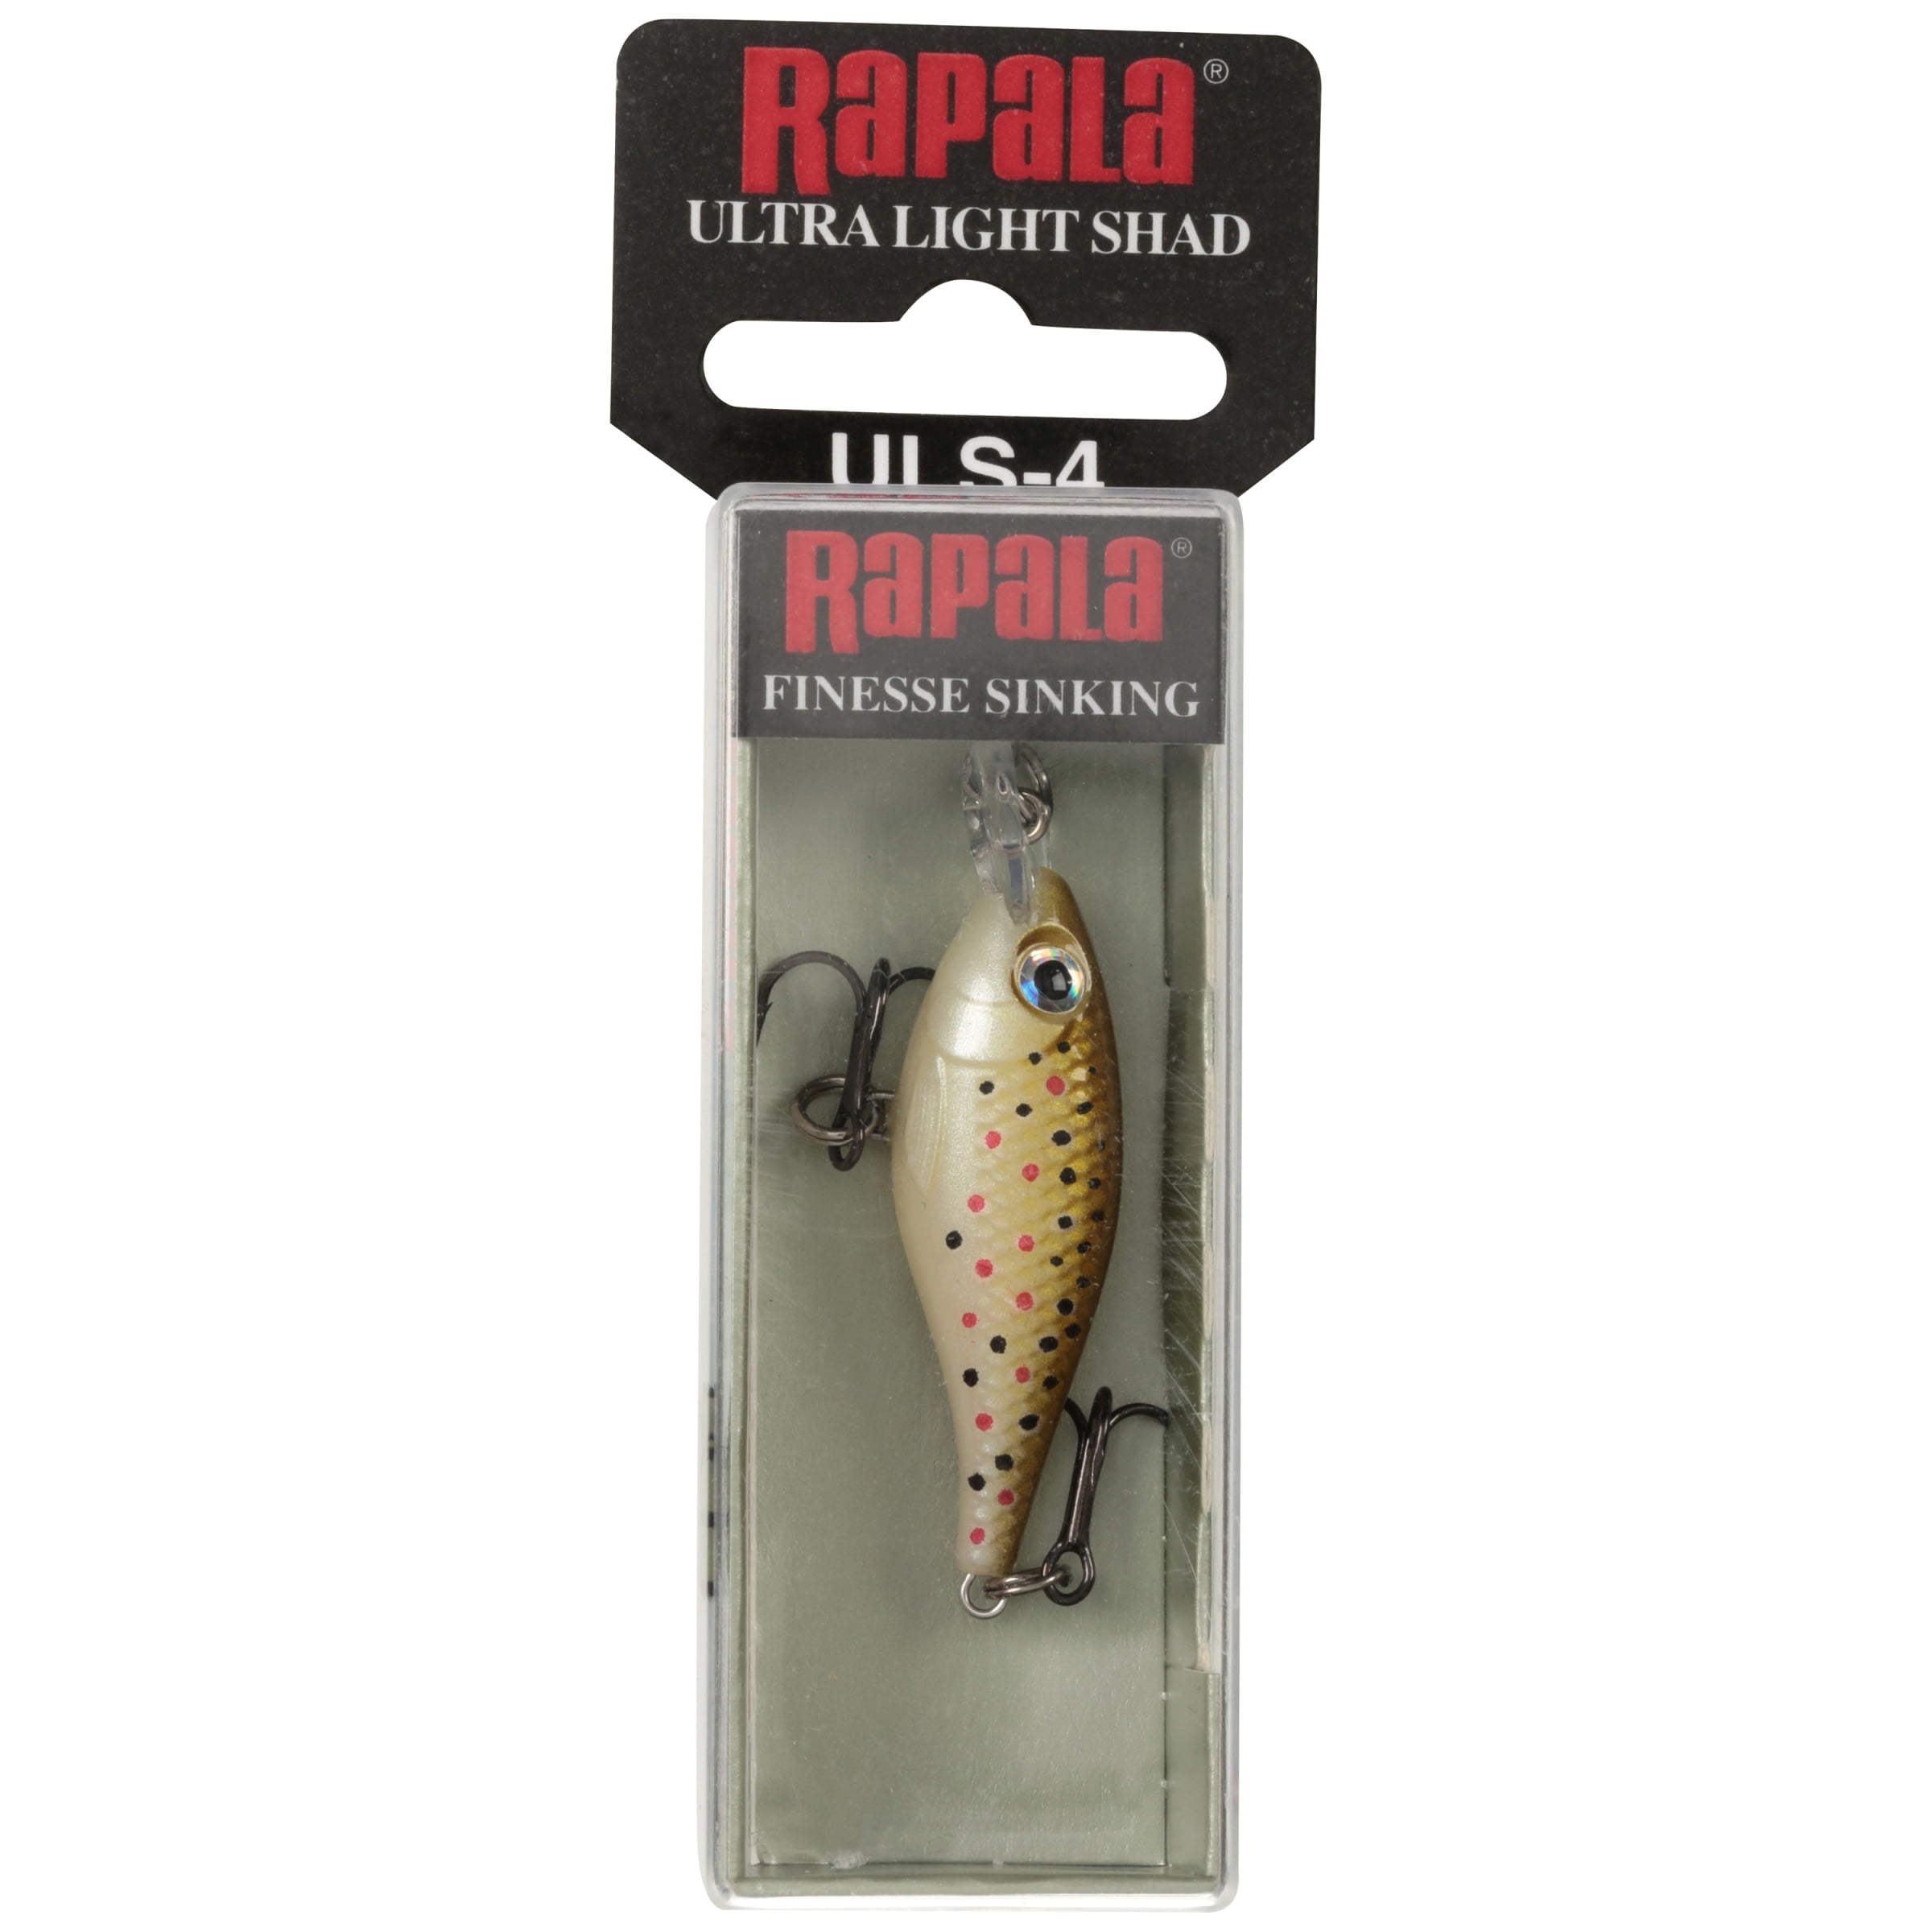 Rapala Ultra Light Shad 04 Crankbait Fishing Lure 1.5 1/8oz Brown Trout 